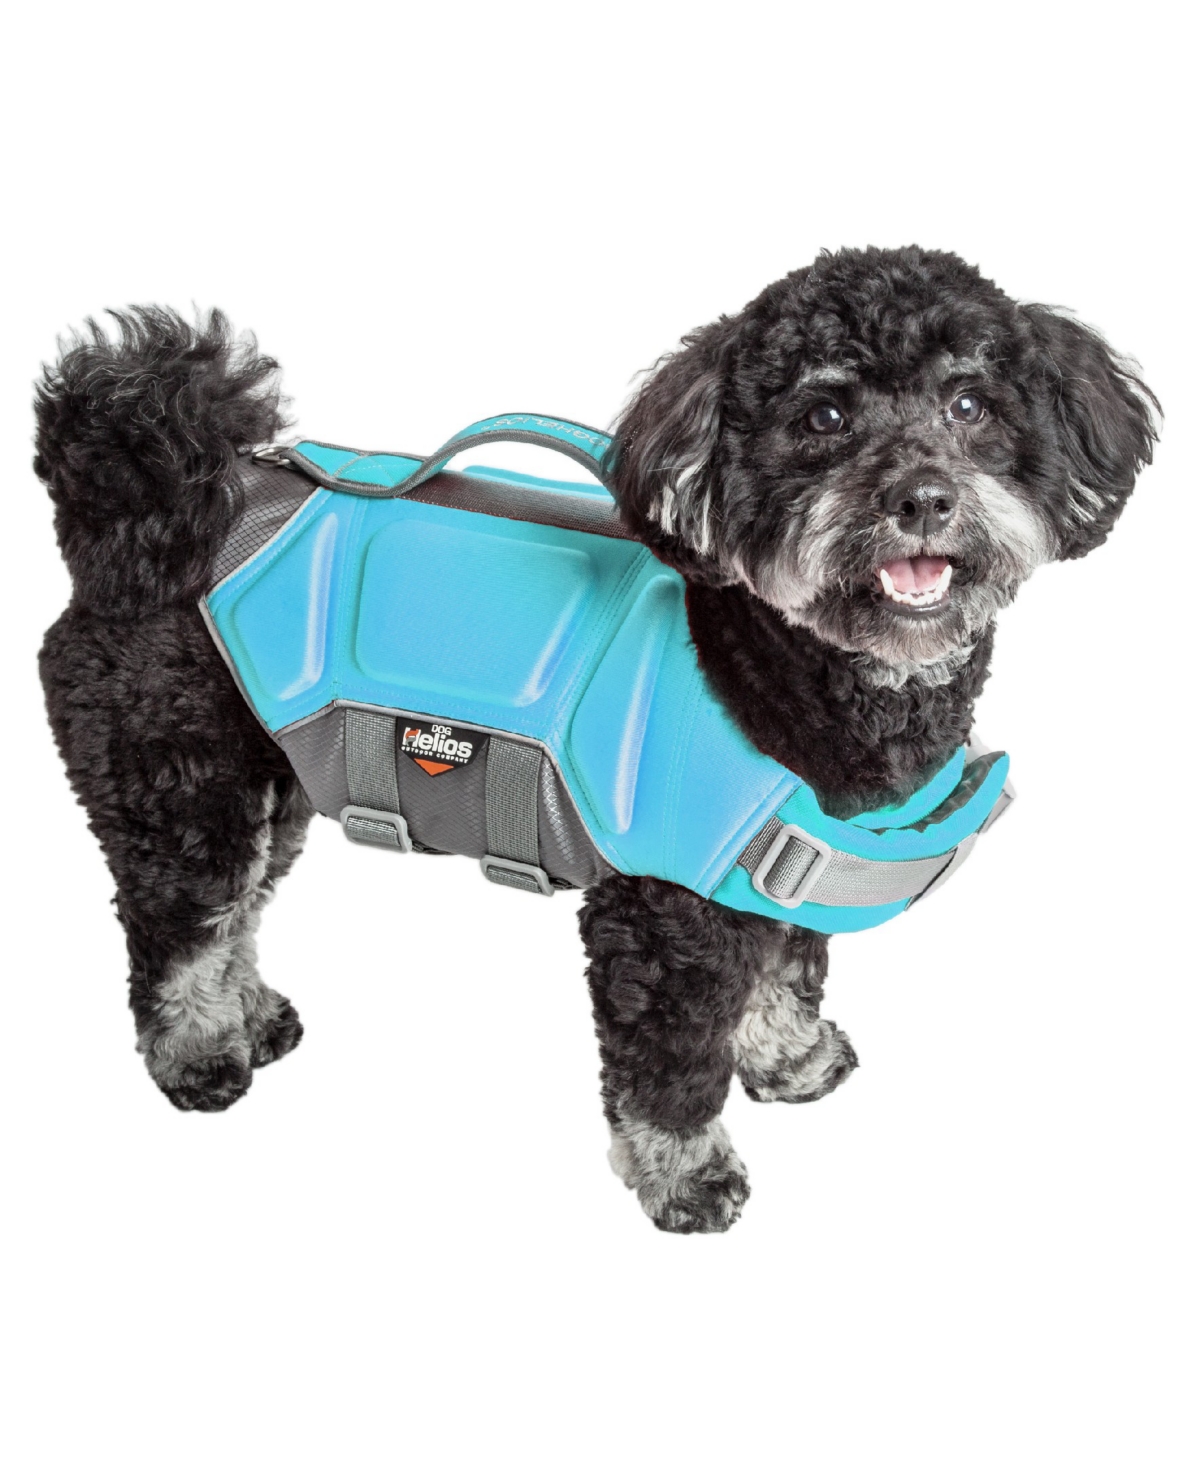 'Tidal Guard' Reflective Pet Dog Life Jacket Vest - Blue